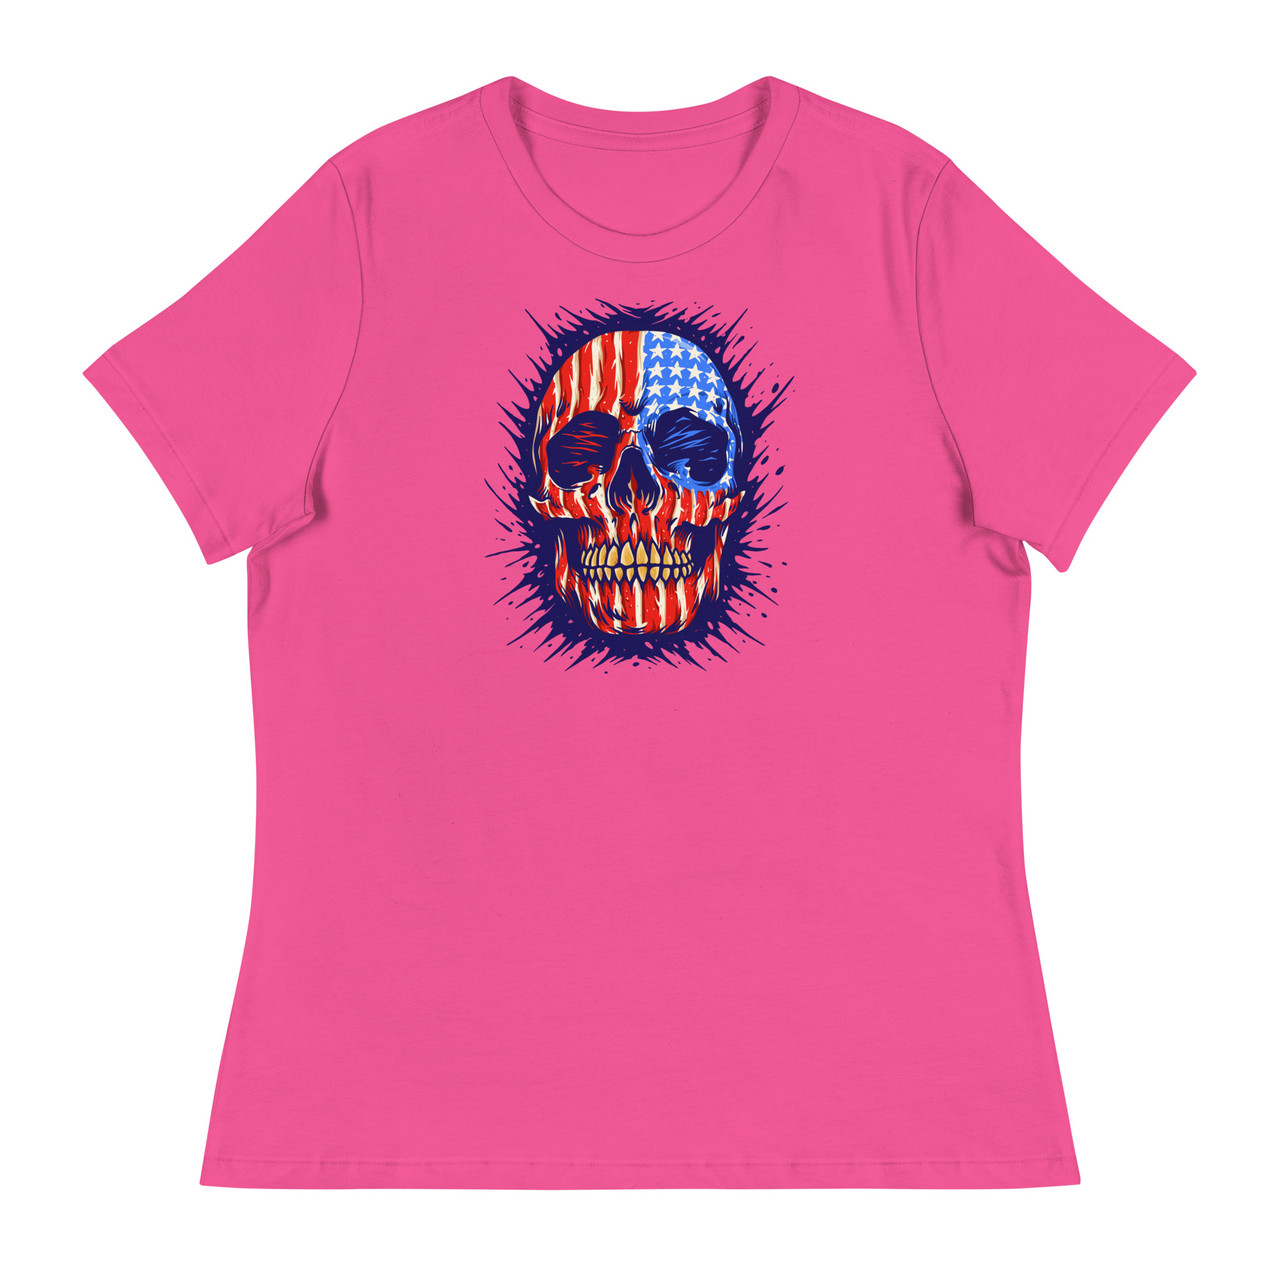 American Skull Women's Relaxed T-Shirt - Bella + Canvas 6400 